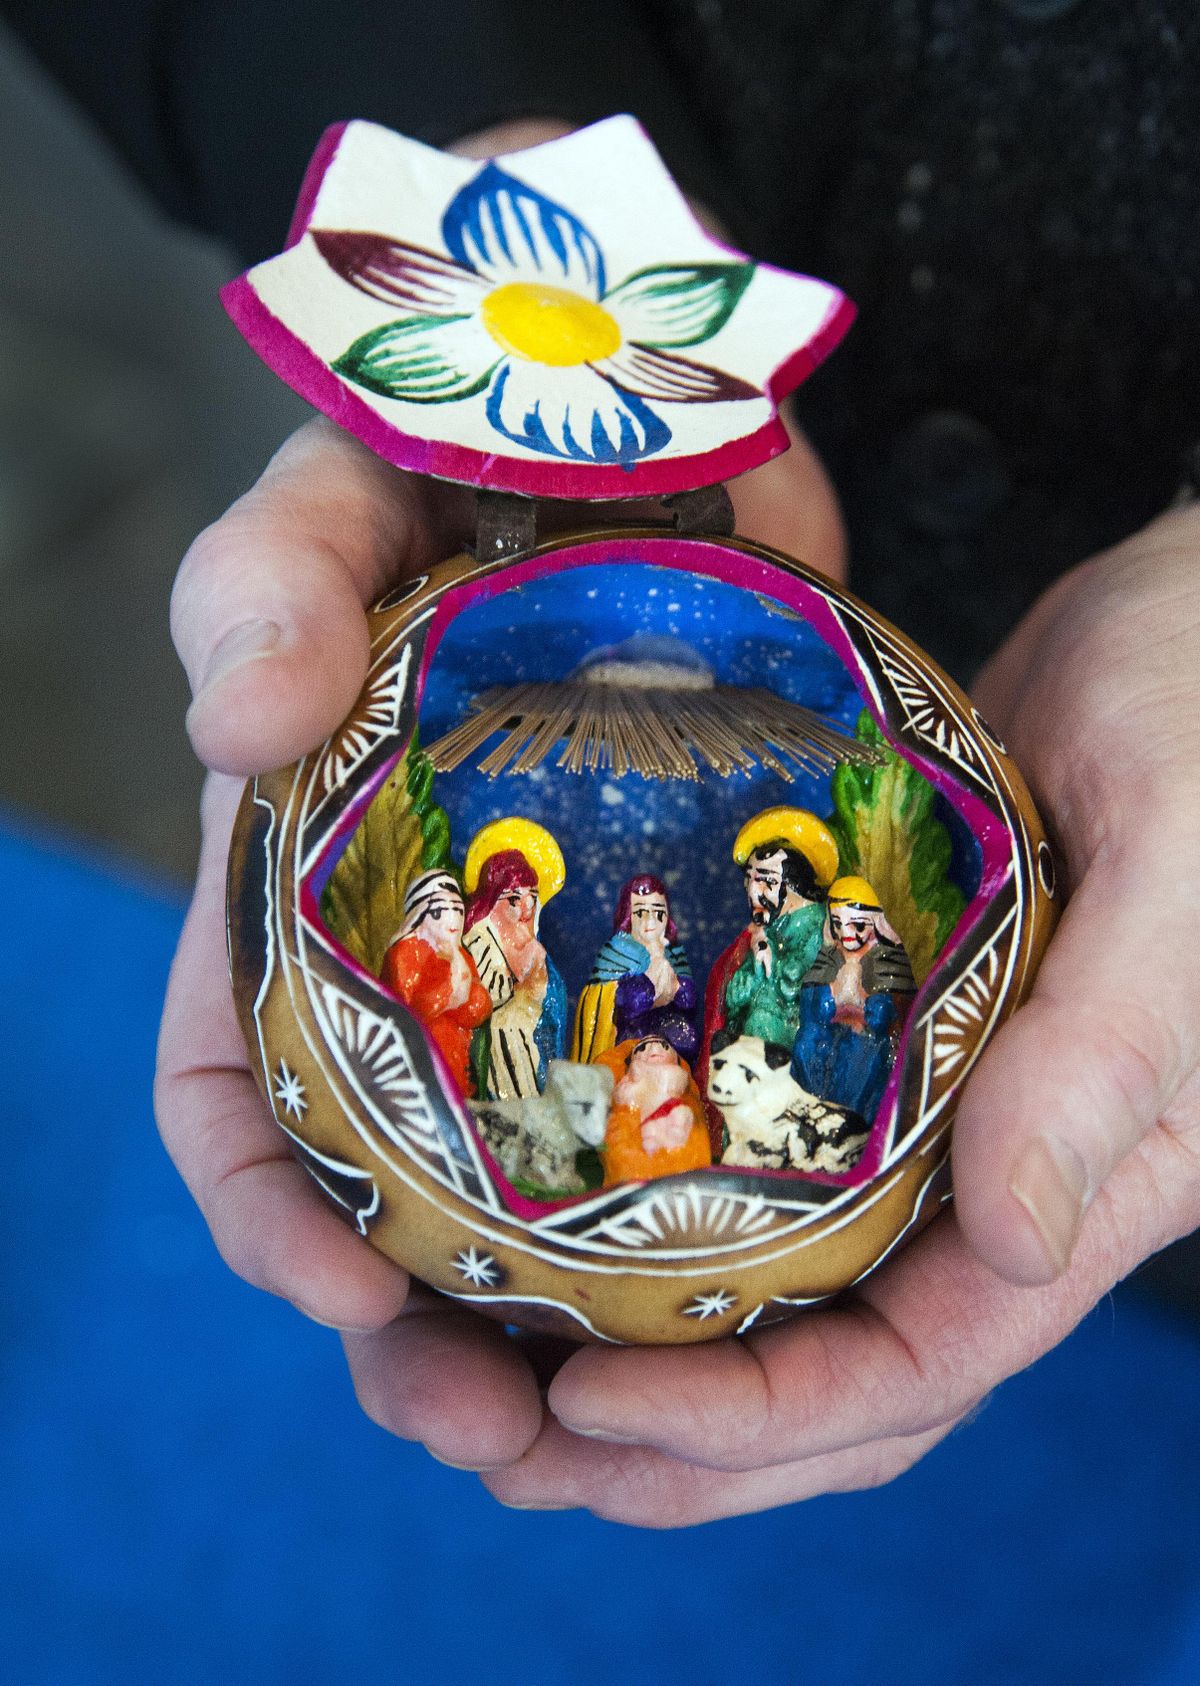 Fr. Tom Connolly’s Nativity scene in a gourd from Guatemala. (Dan Pelle / The Spokesman-Review)